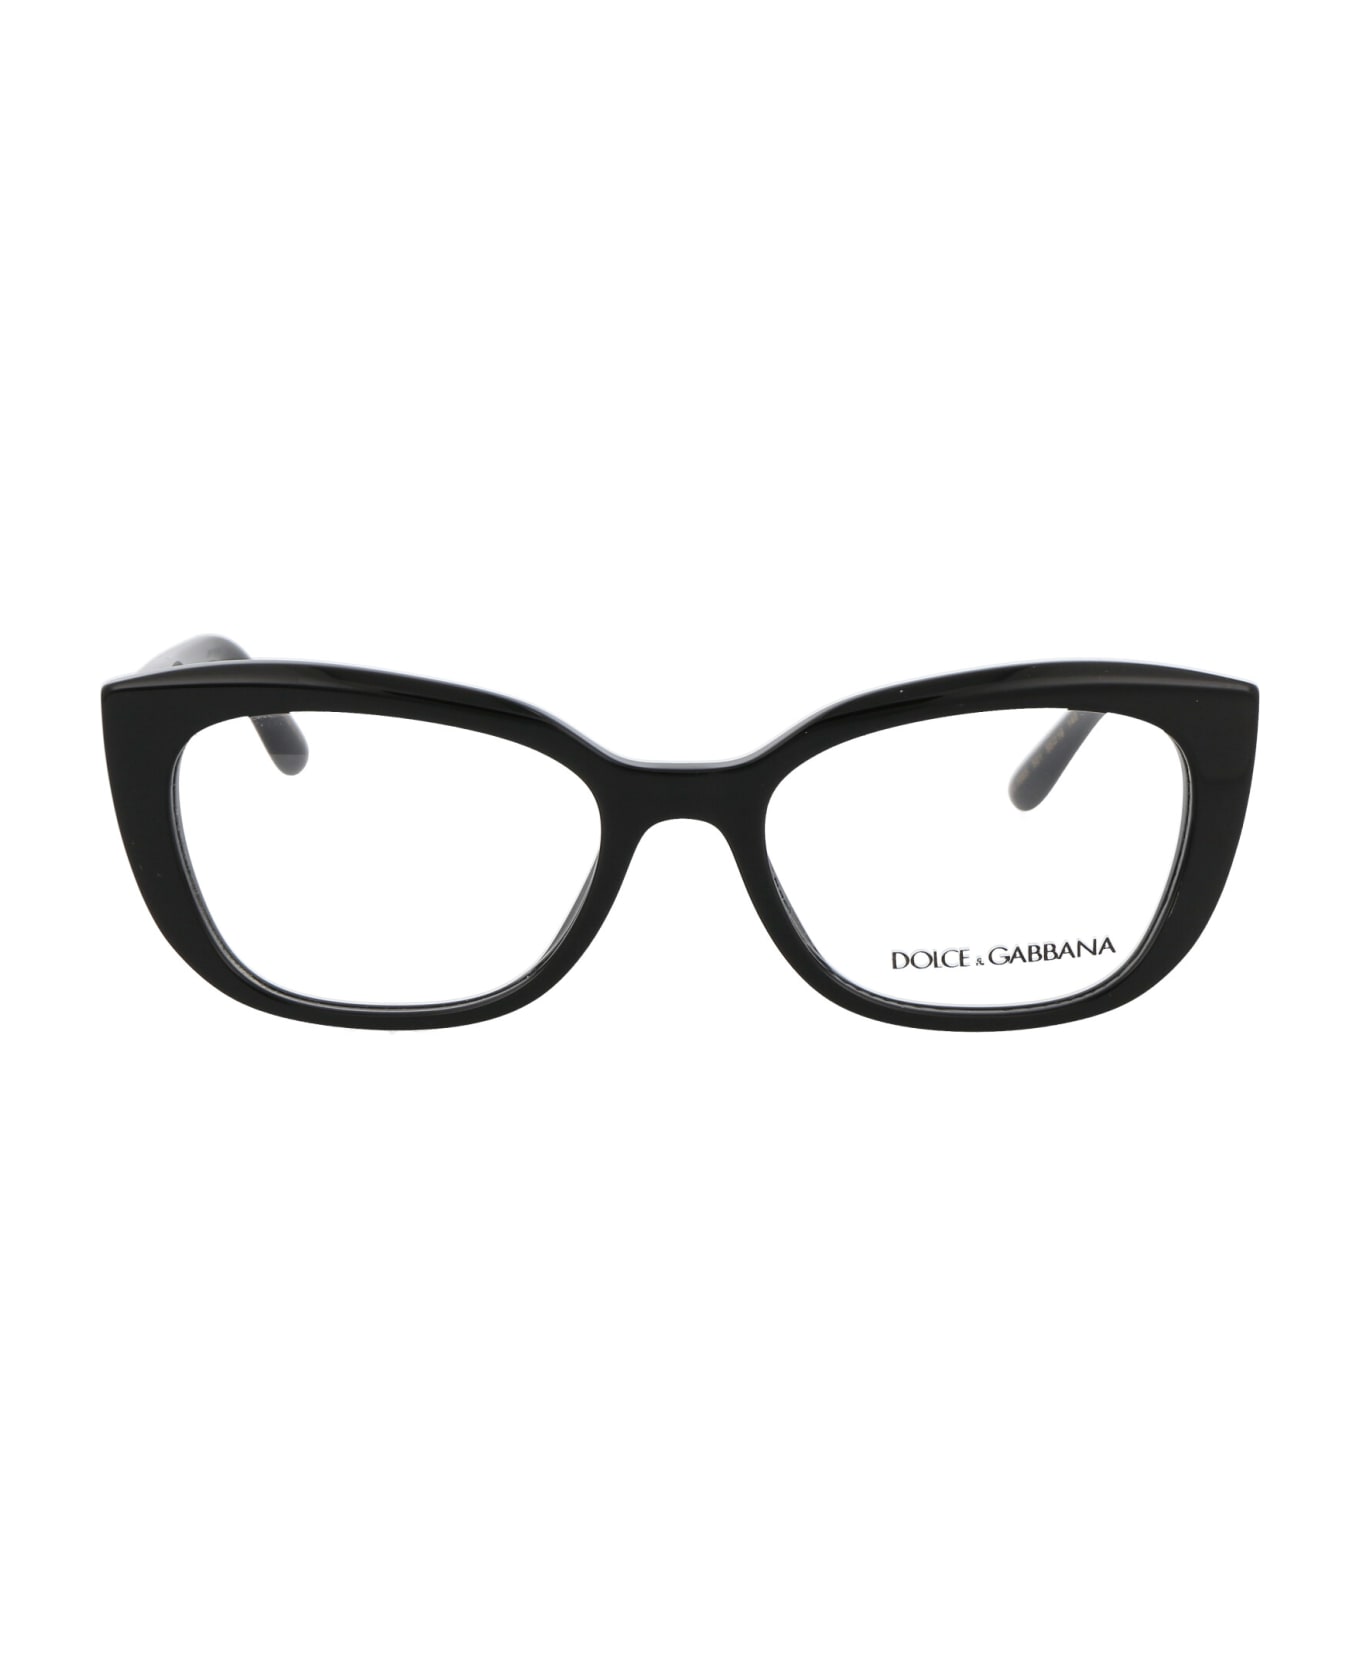 Dolce & Gabbana Eyewear 0dg3355 Glasses - 501 BLACK アイウェア